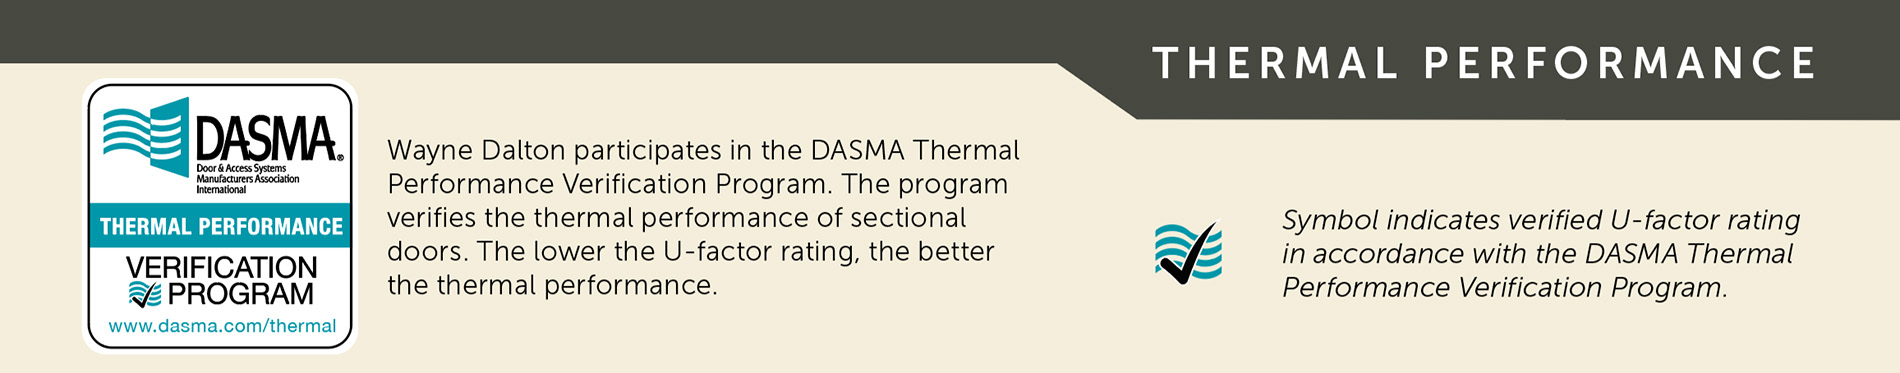 dasma thermal performance verification program details